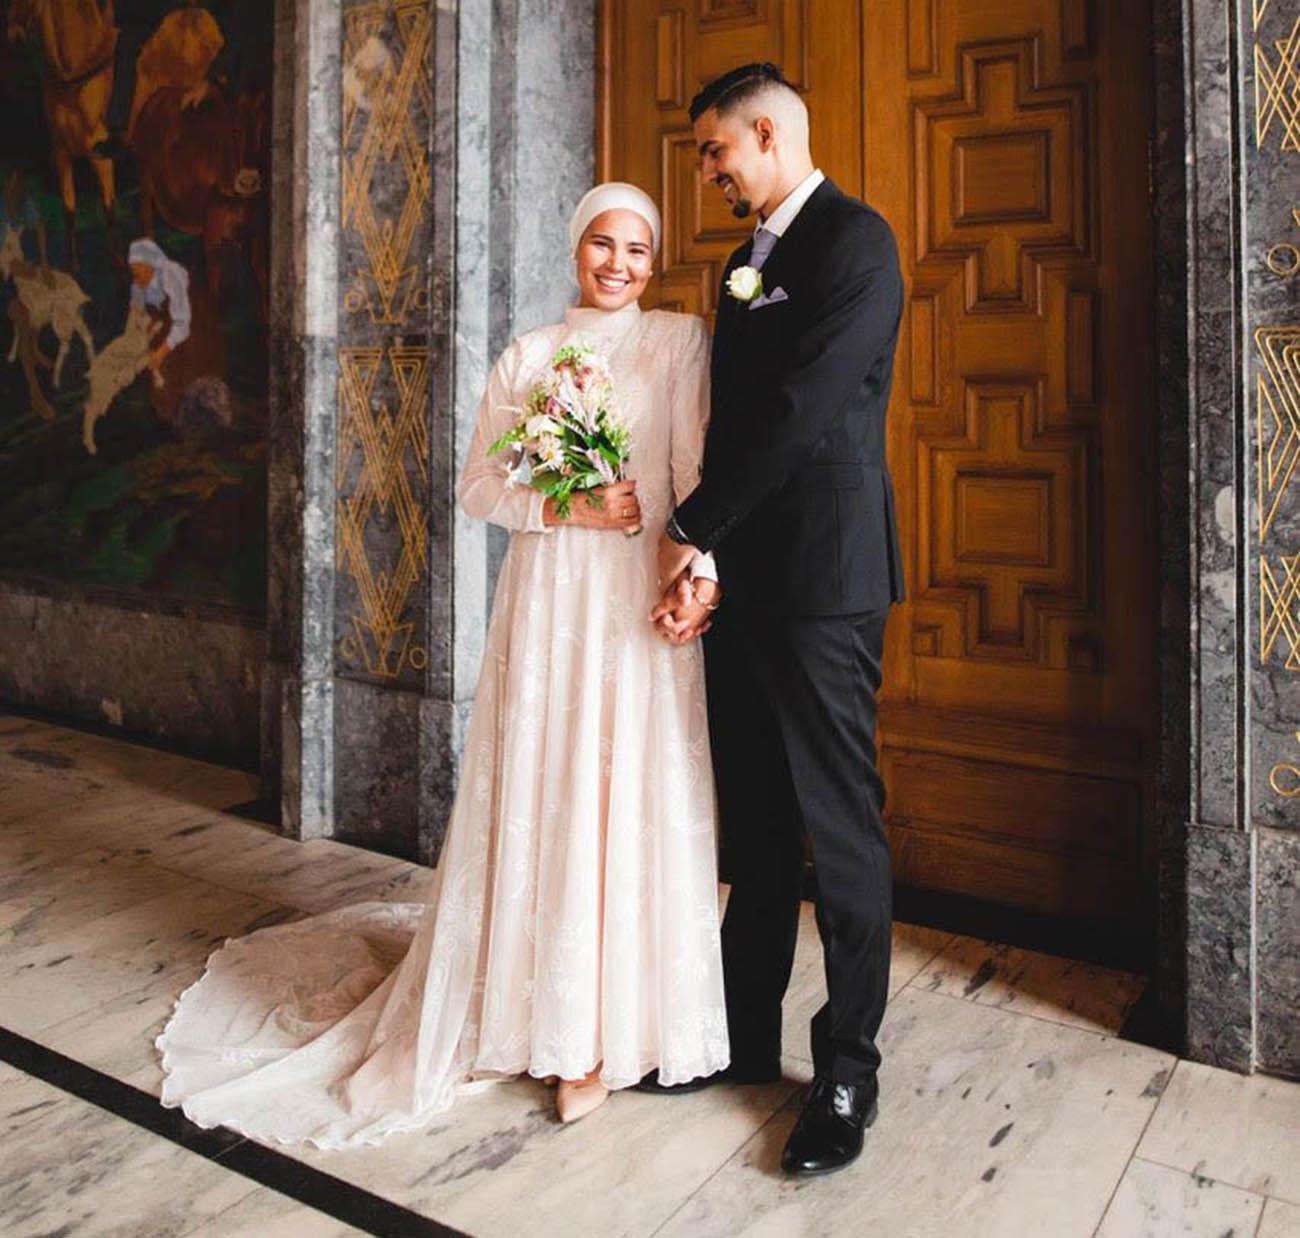  Iman Meskini gifte sig med Mourad Jarrari  i rådhuset i Oslo.